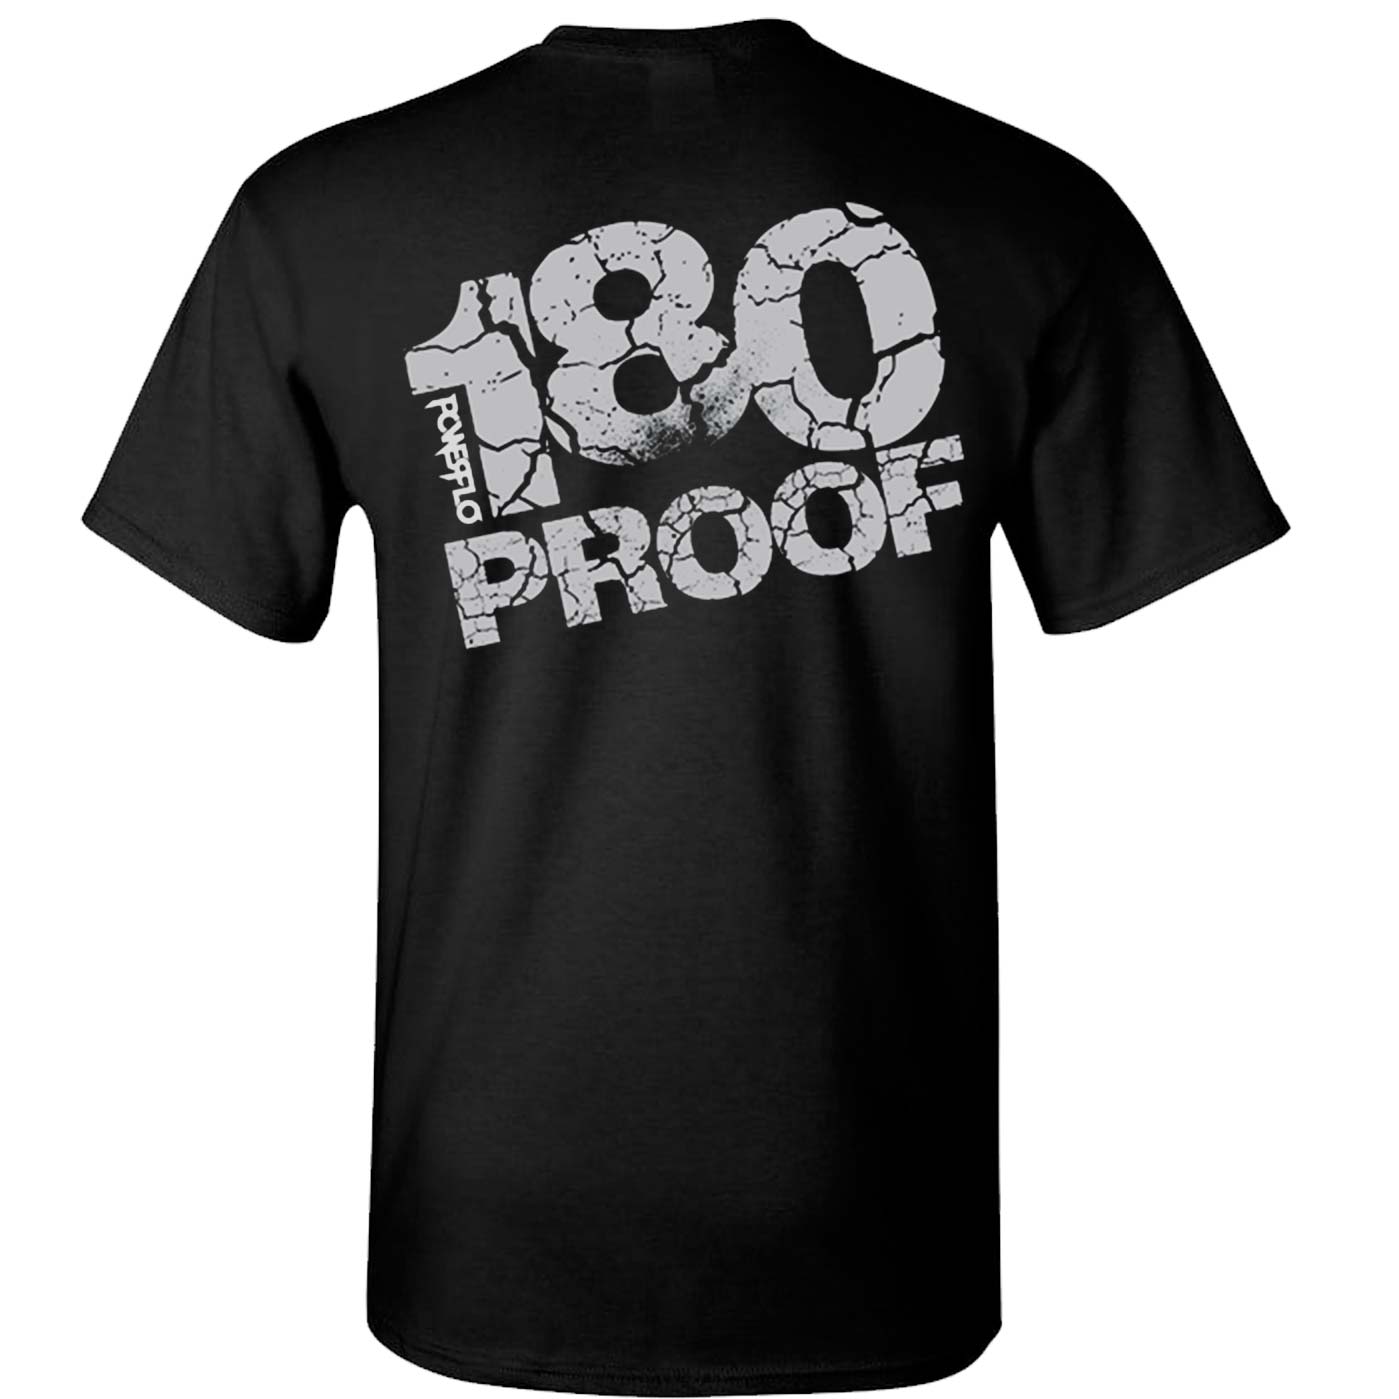 Crest-180 Proof T-Shirt